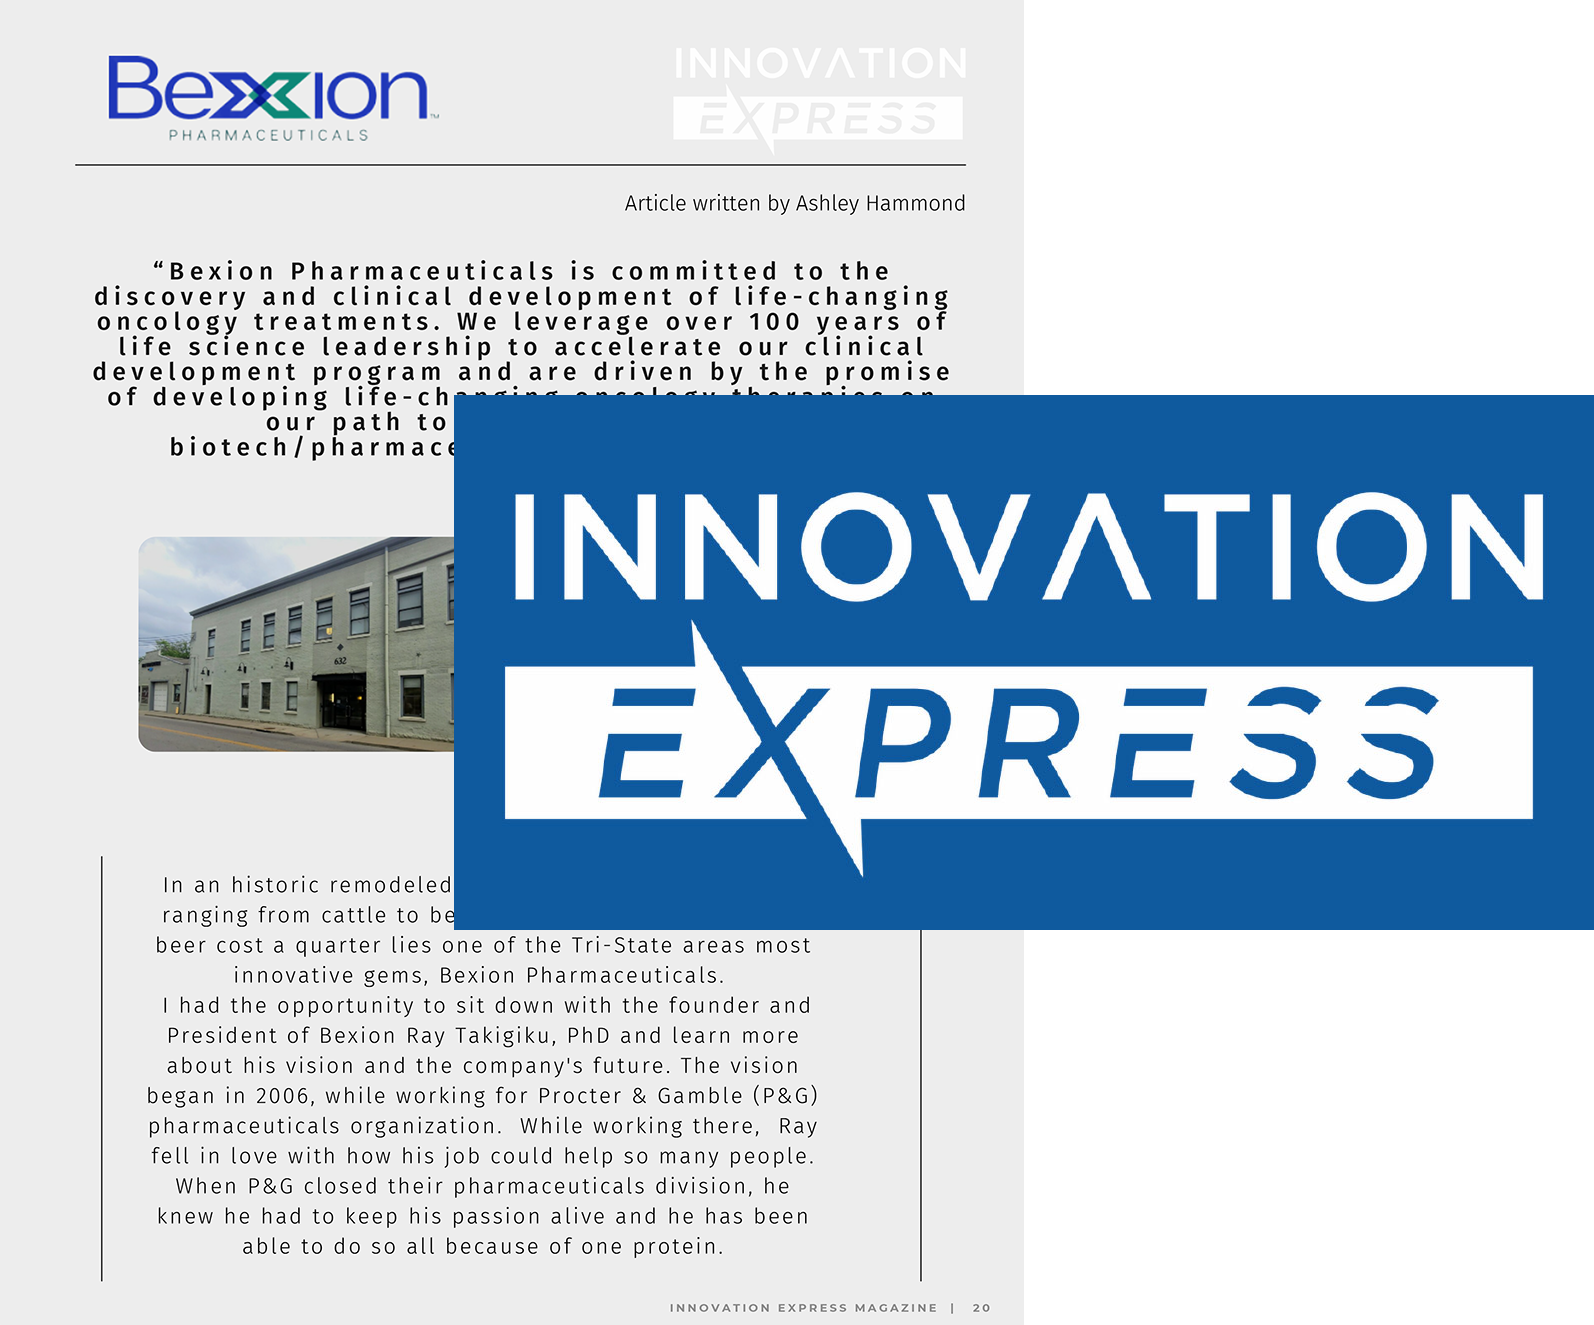 Innovation Express magazine cover